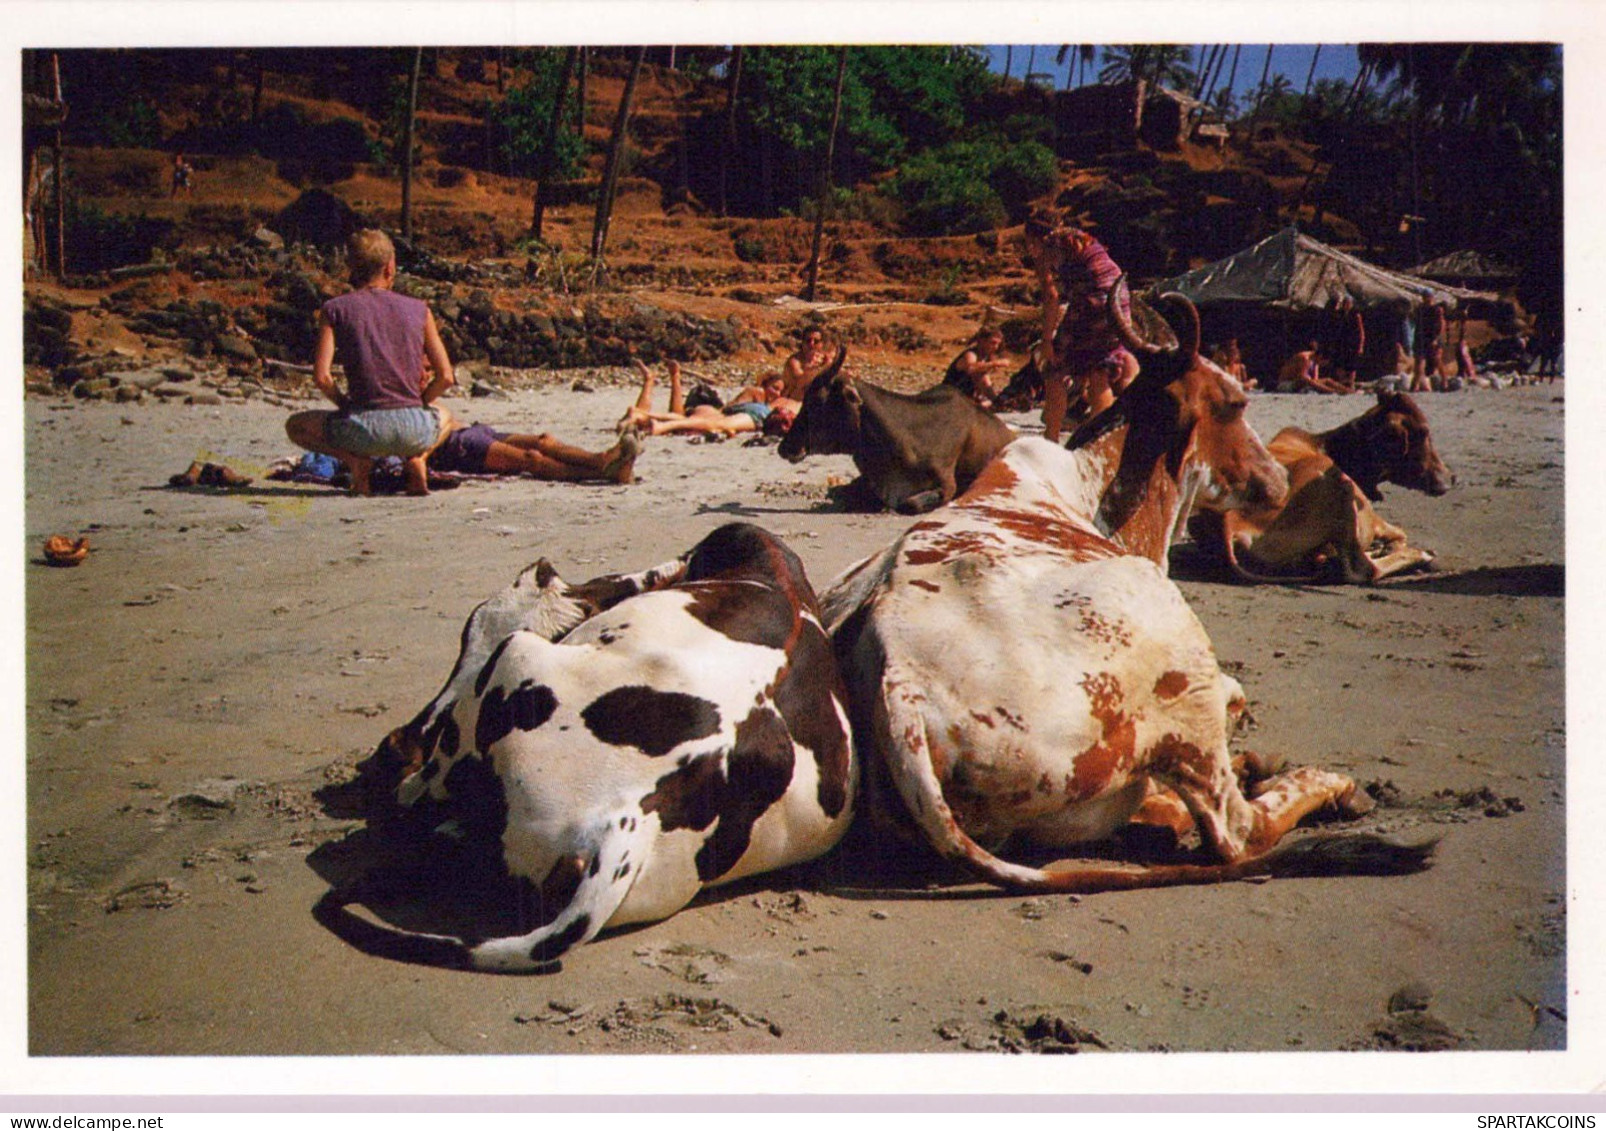 KUH Tier Vintage Ansichtskarte Postkarte CPSM #PBR808.DE - Cows